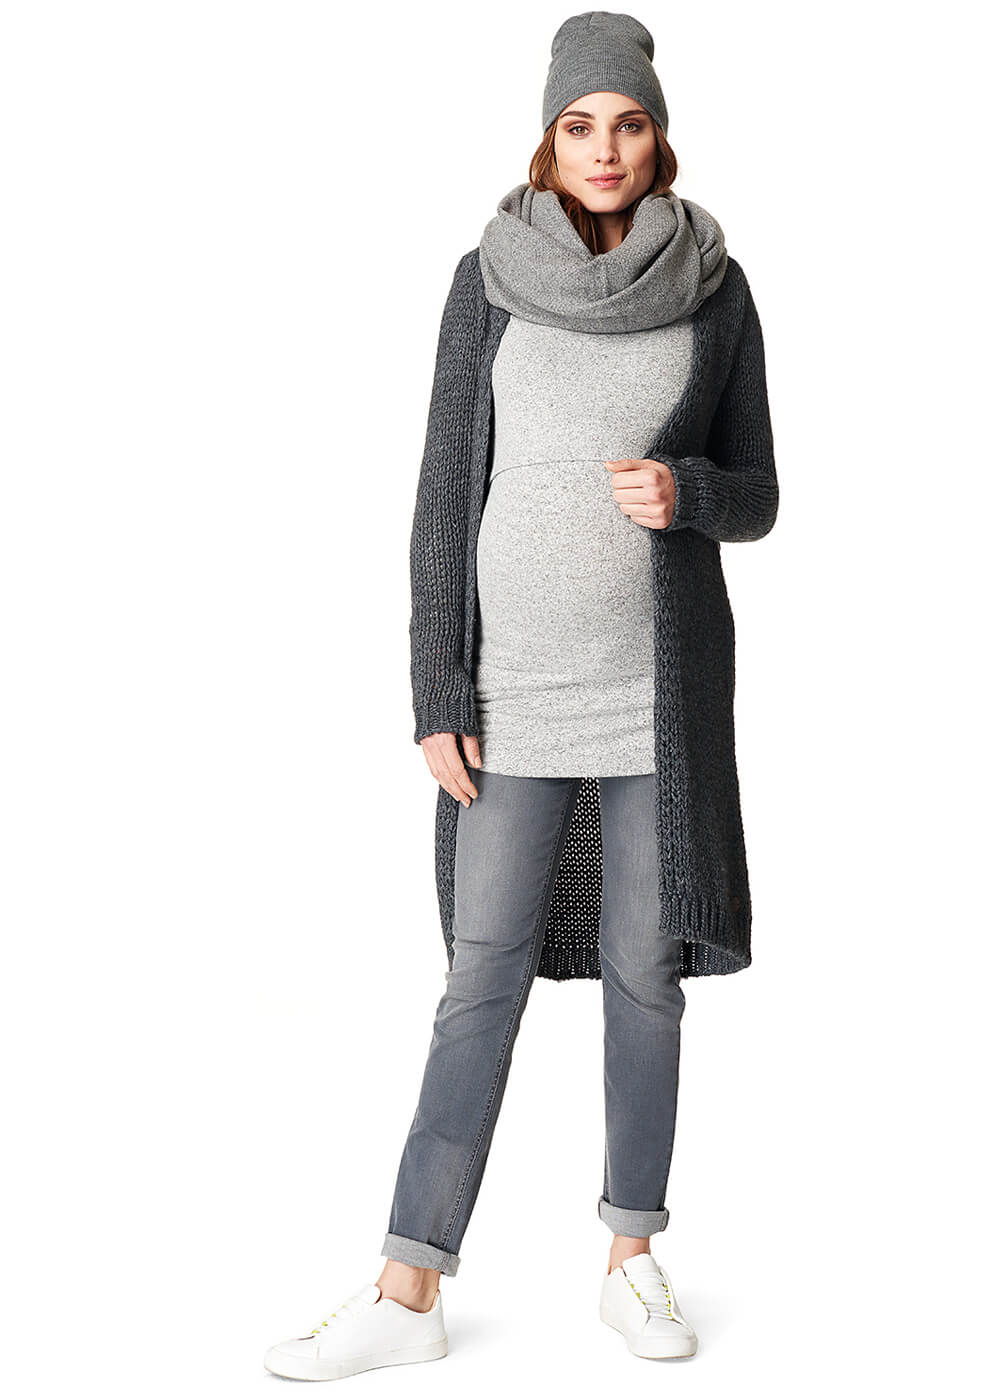 Hazel Maternity Knit Long Cardigan in Grey by Noppies